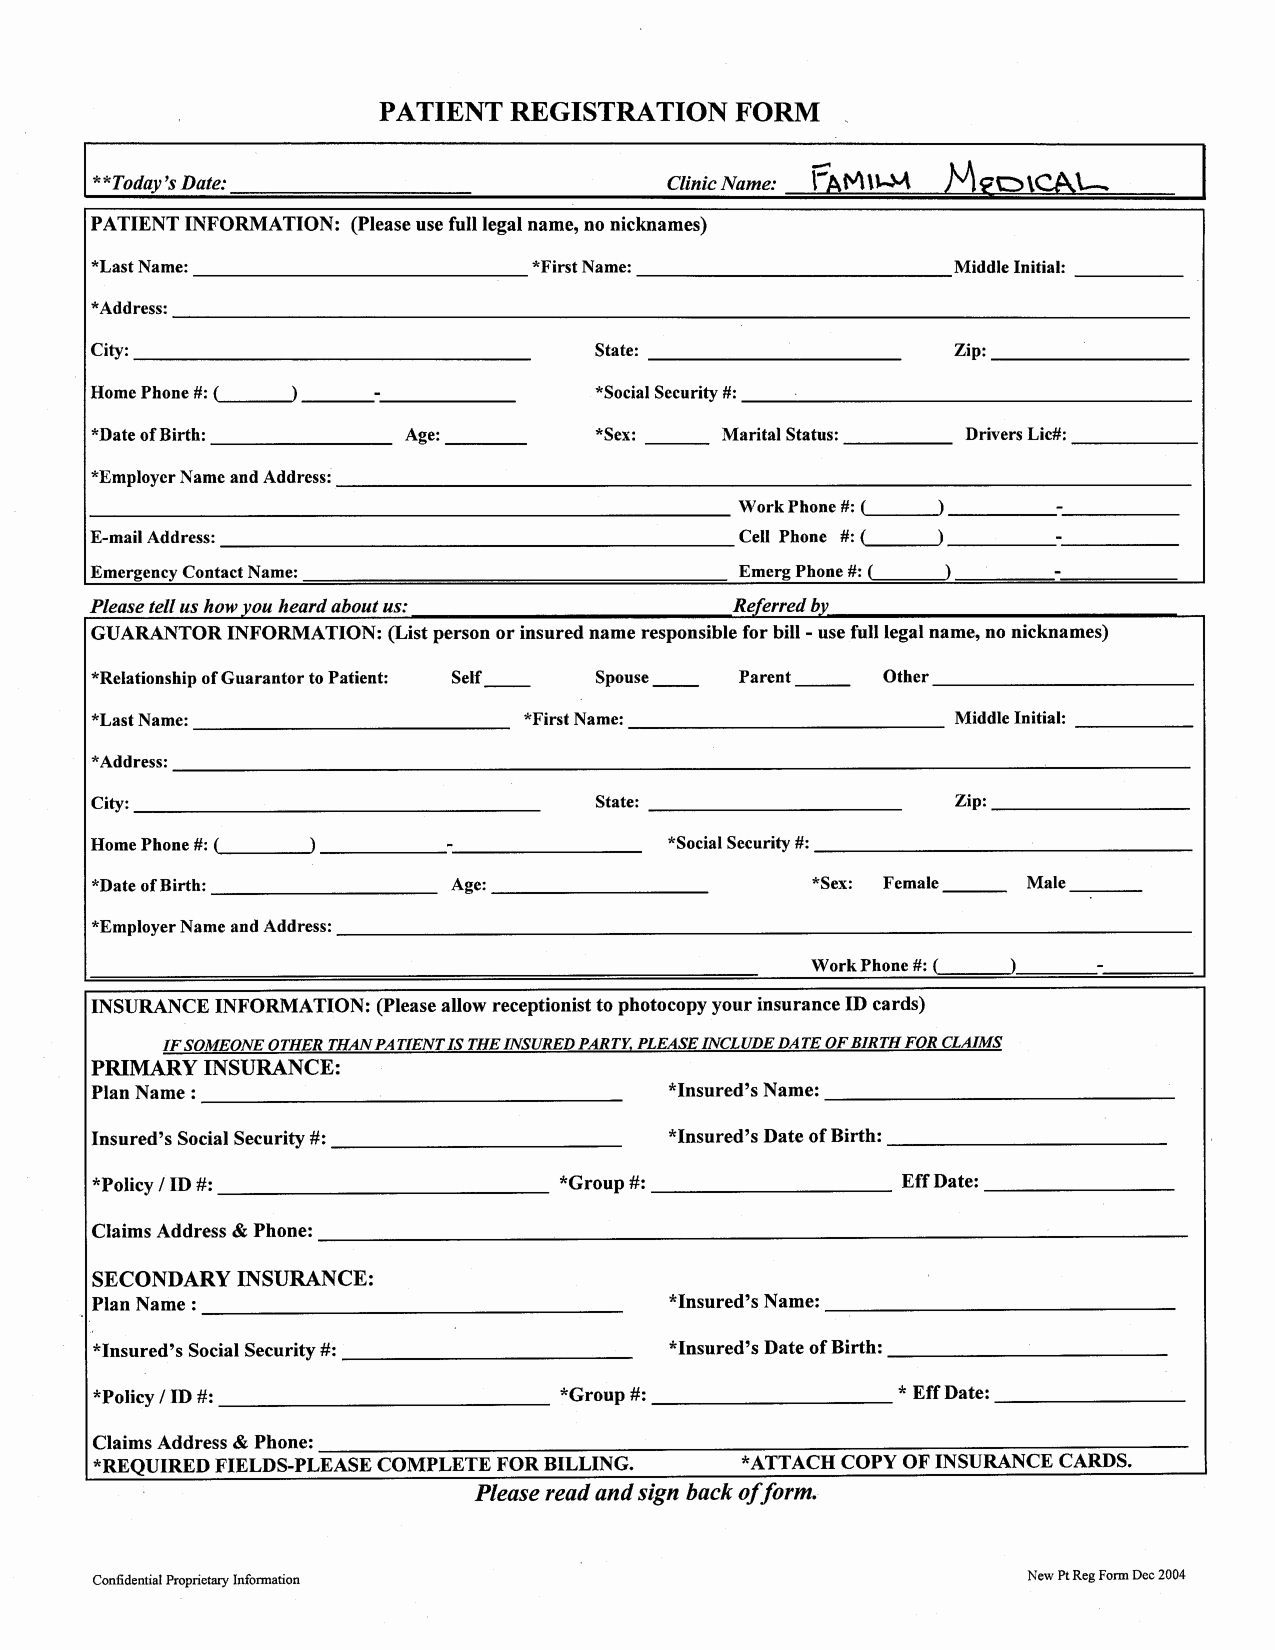 post printable patient registration forms